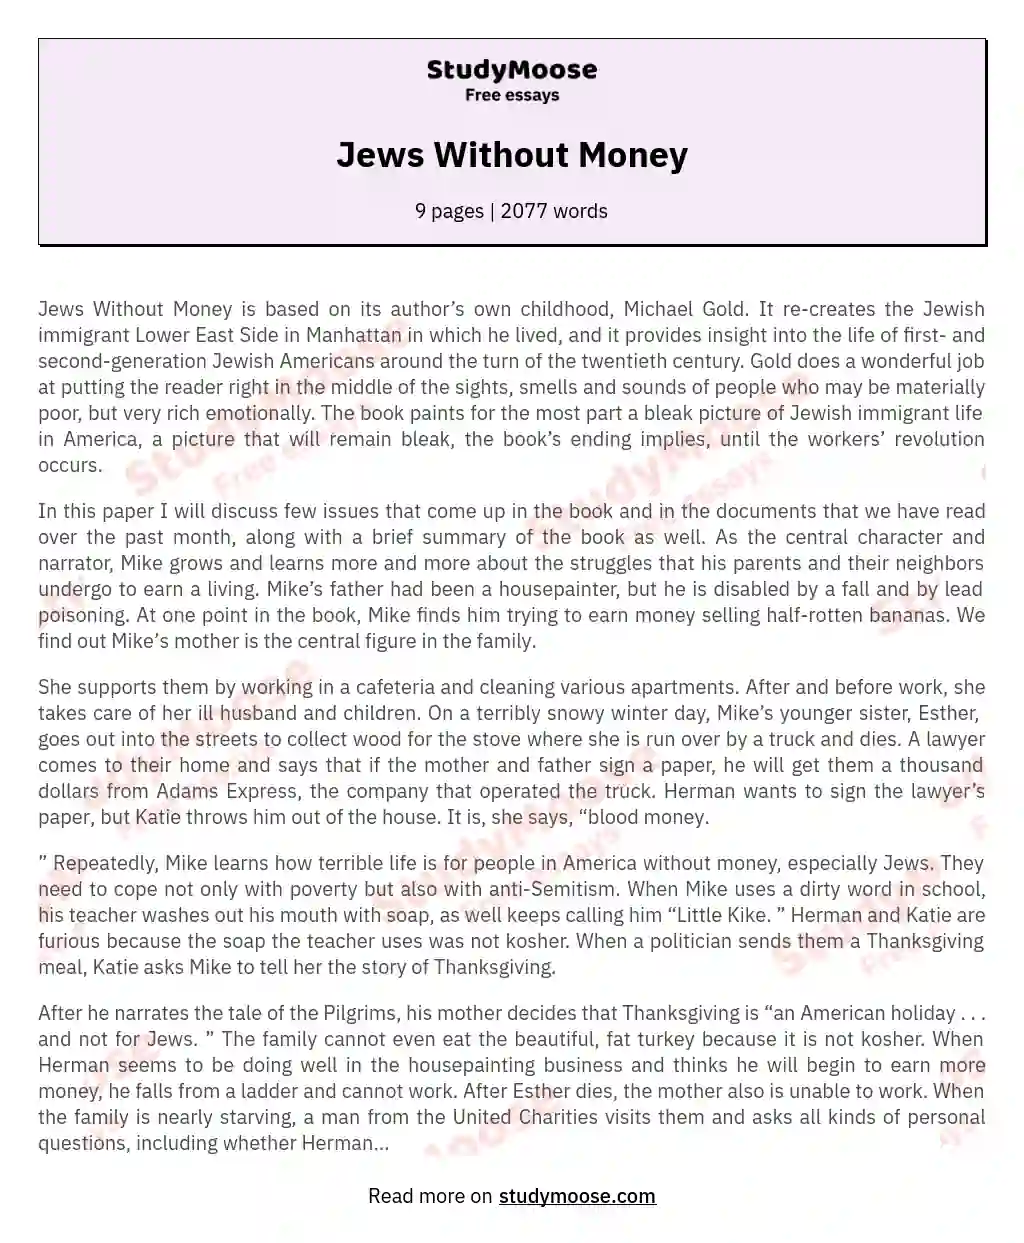 Jews Without Money essay